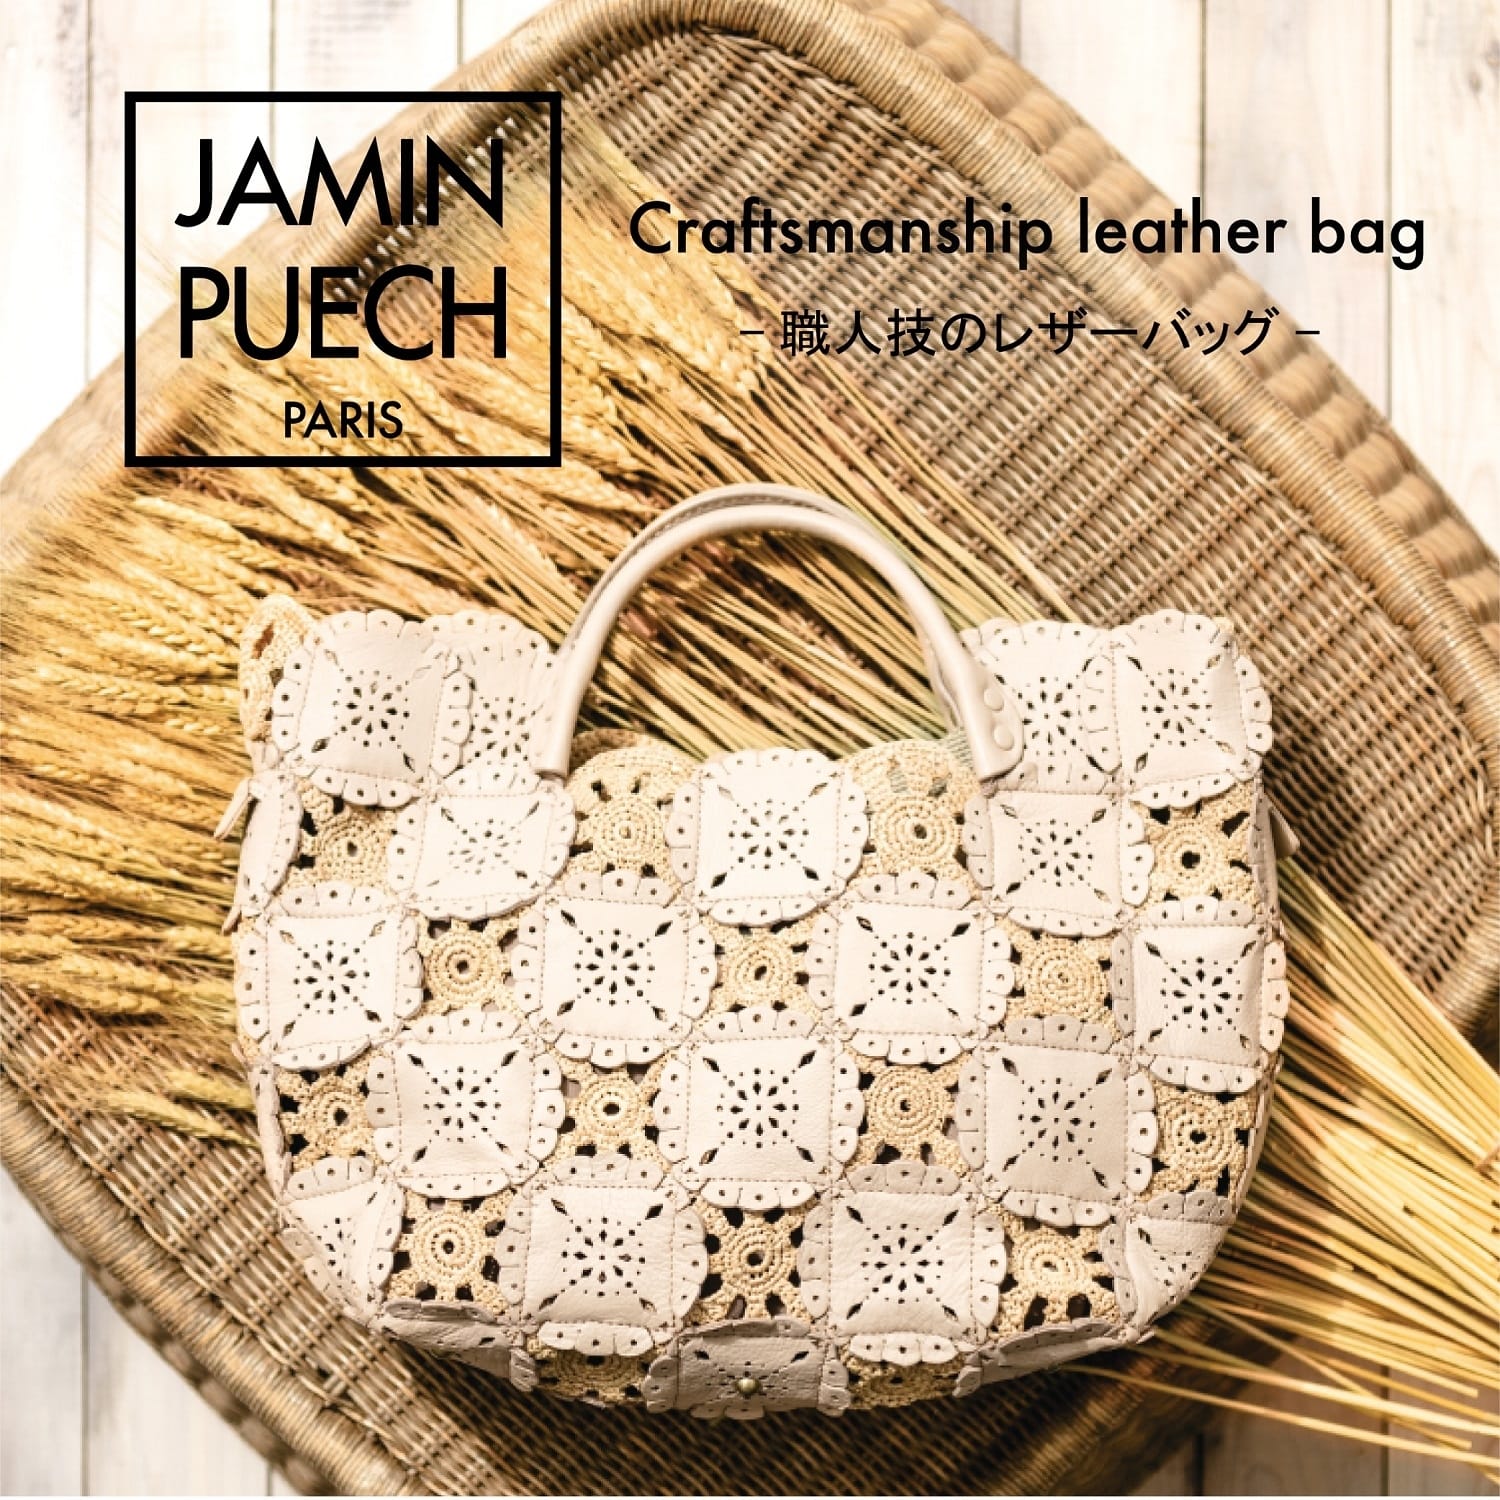 JAMIN PUECH Craftsmanship leather bag -職人技のレザーバッグ